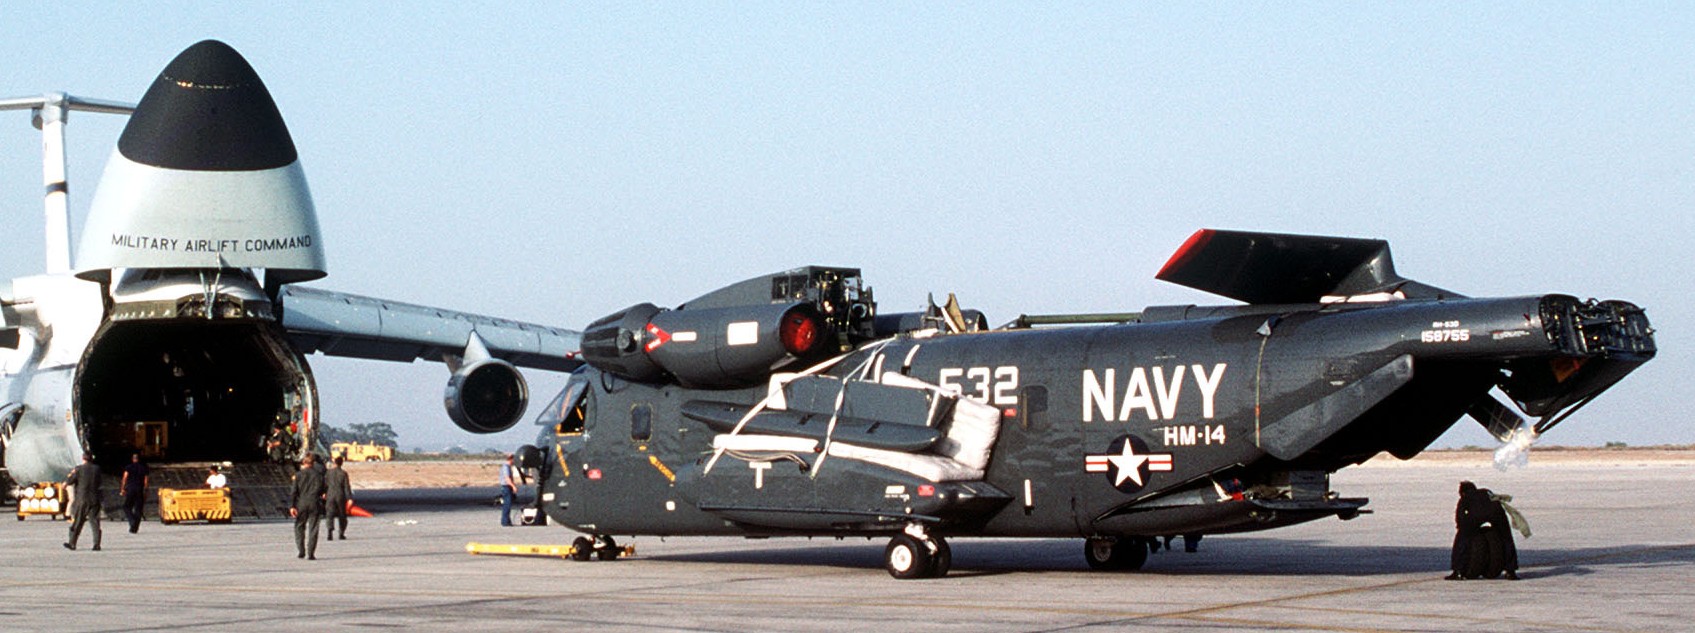 hm-14 vanguard helicopter mine countermeasures squadron navy rh-53d sea stallion 98